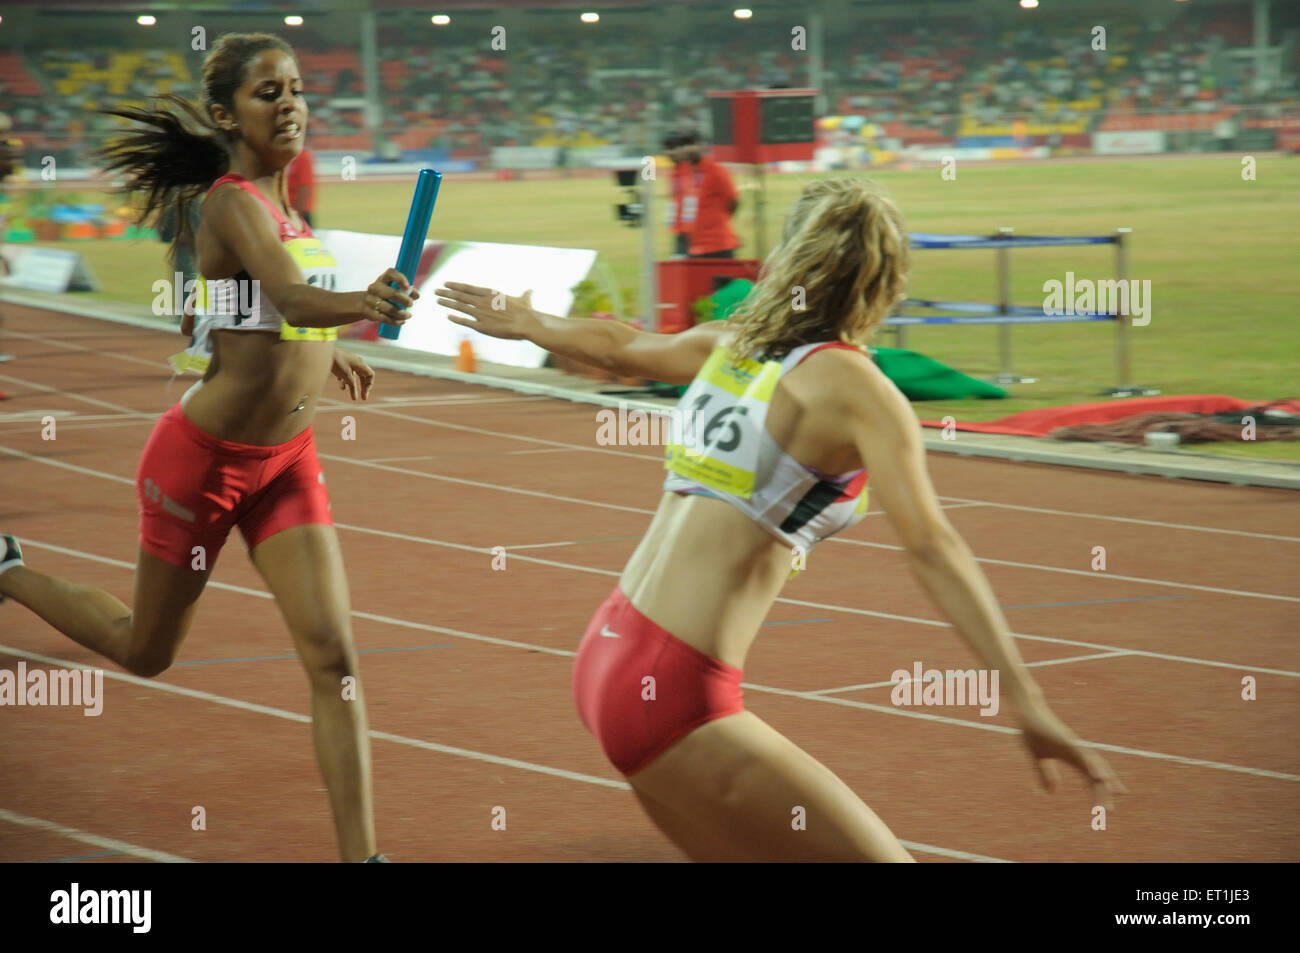 athlete passing baton, athletes running, sportswomen running, track and field, sports competition, Pune, Maharashtra, India, Asia, Asian, Indian Stock Photo